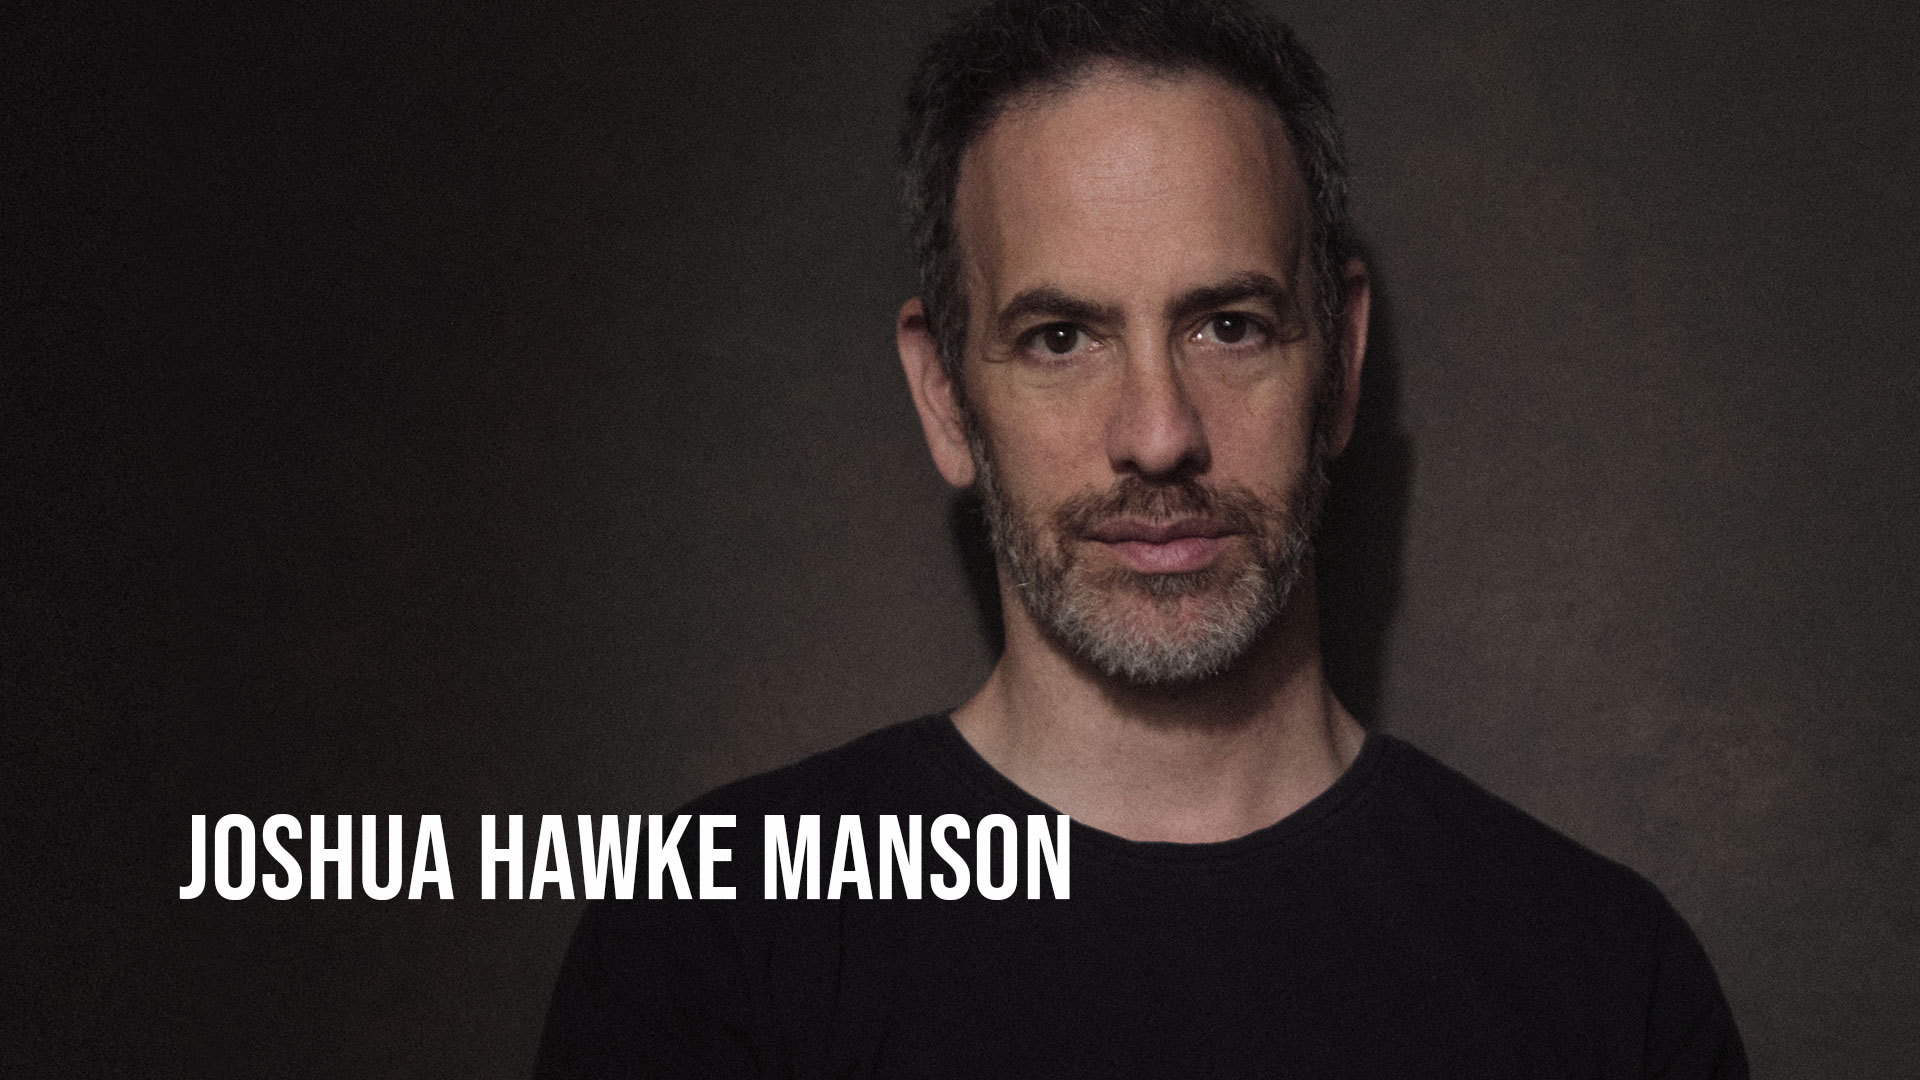 Joshua Hawke Manson - Videobook Actor